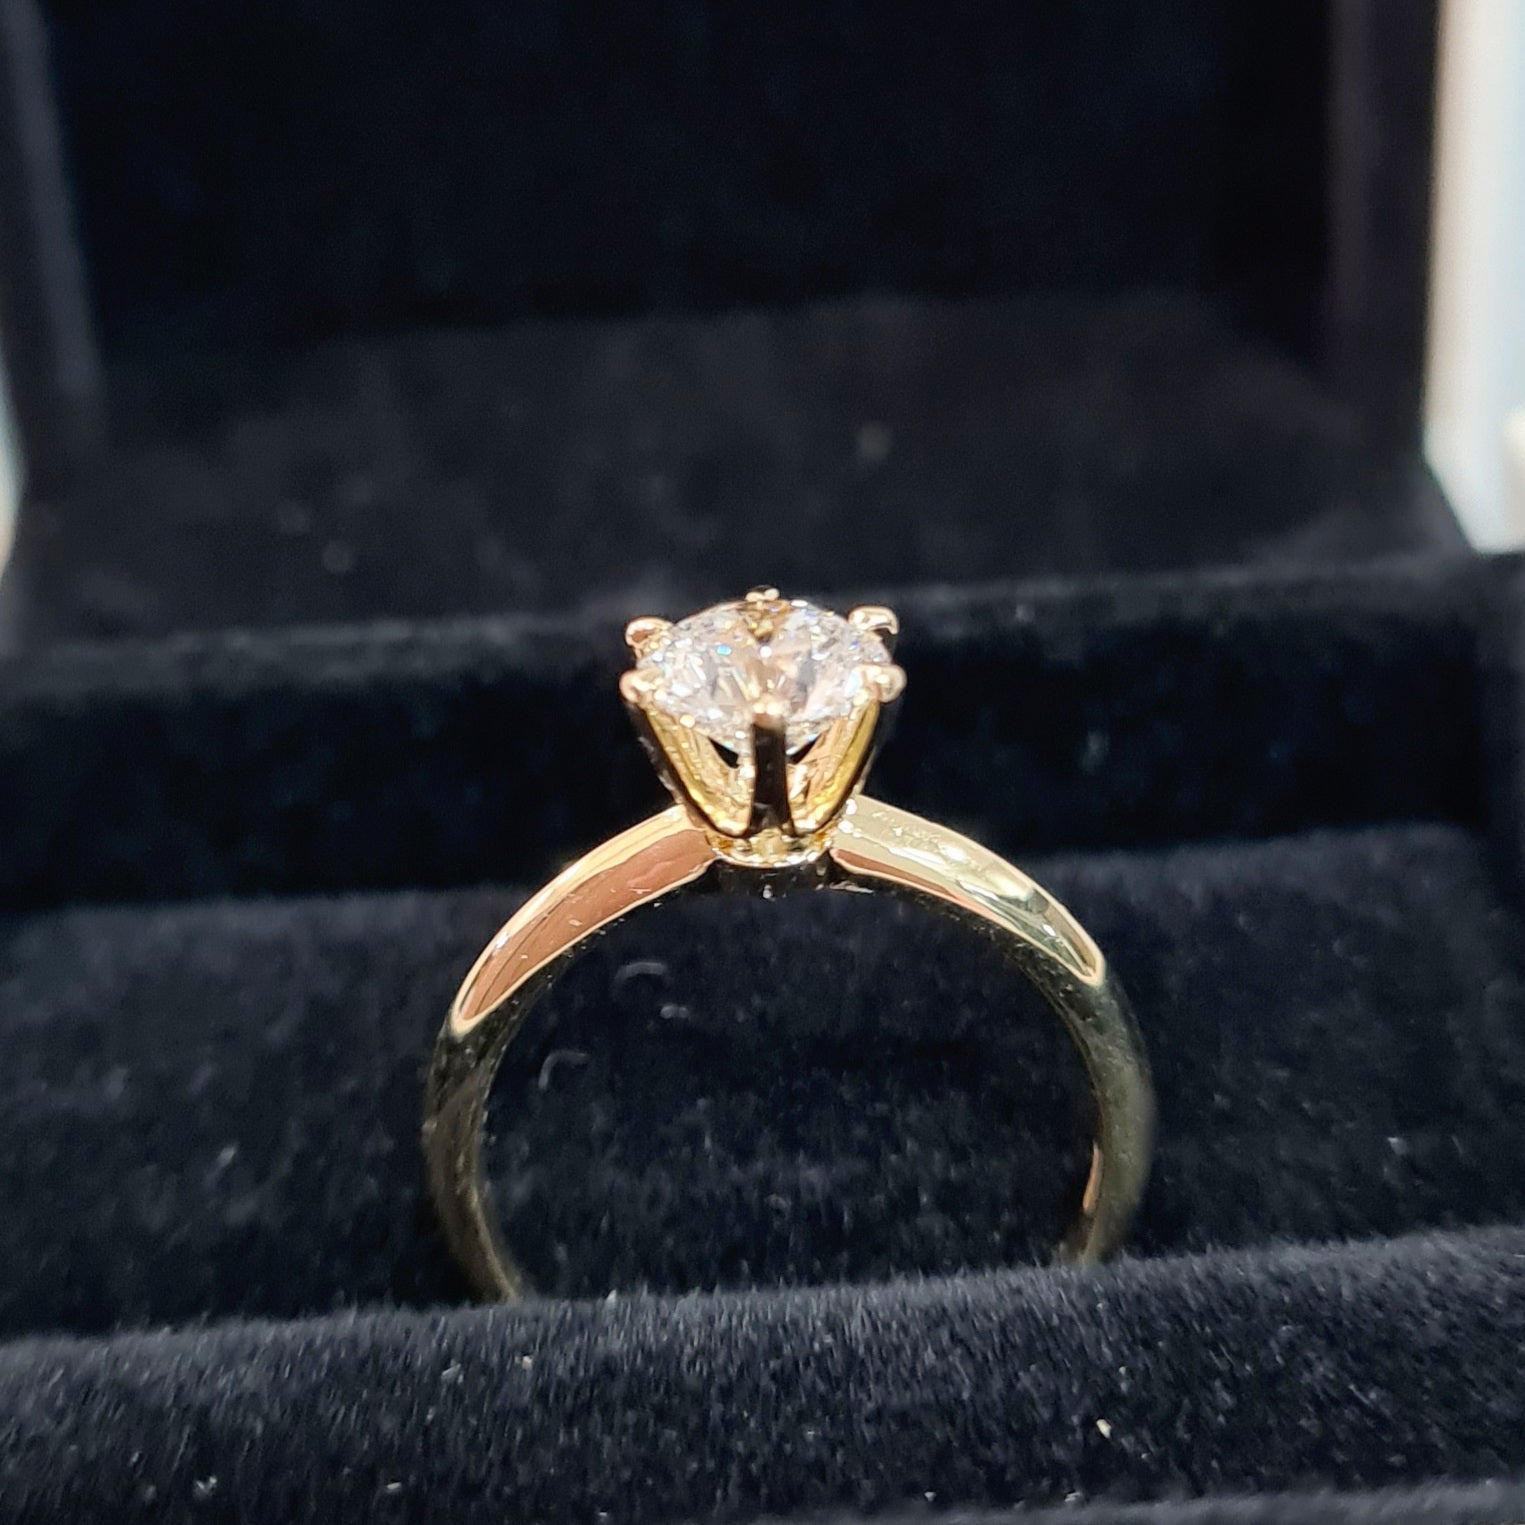 18k yellow gold Classic Diamond Ring